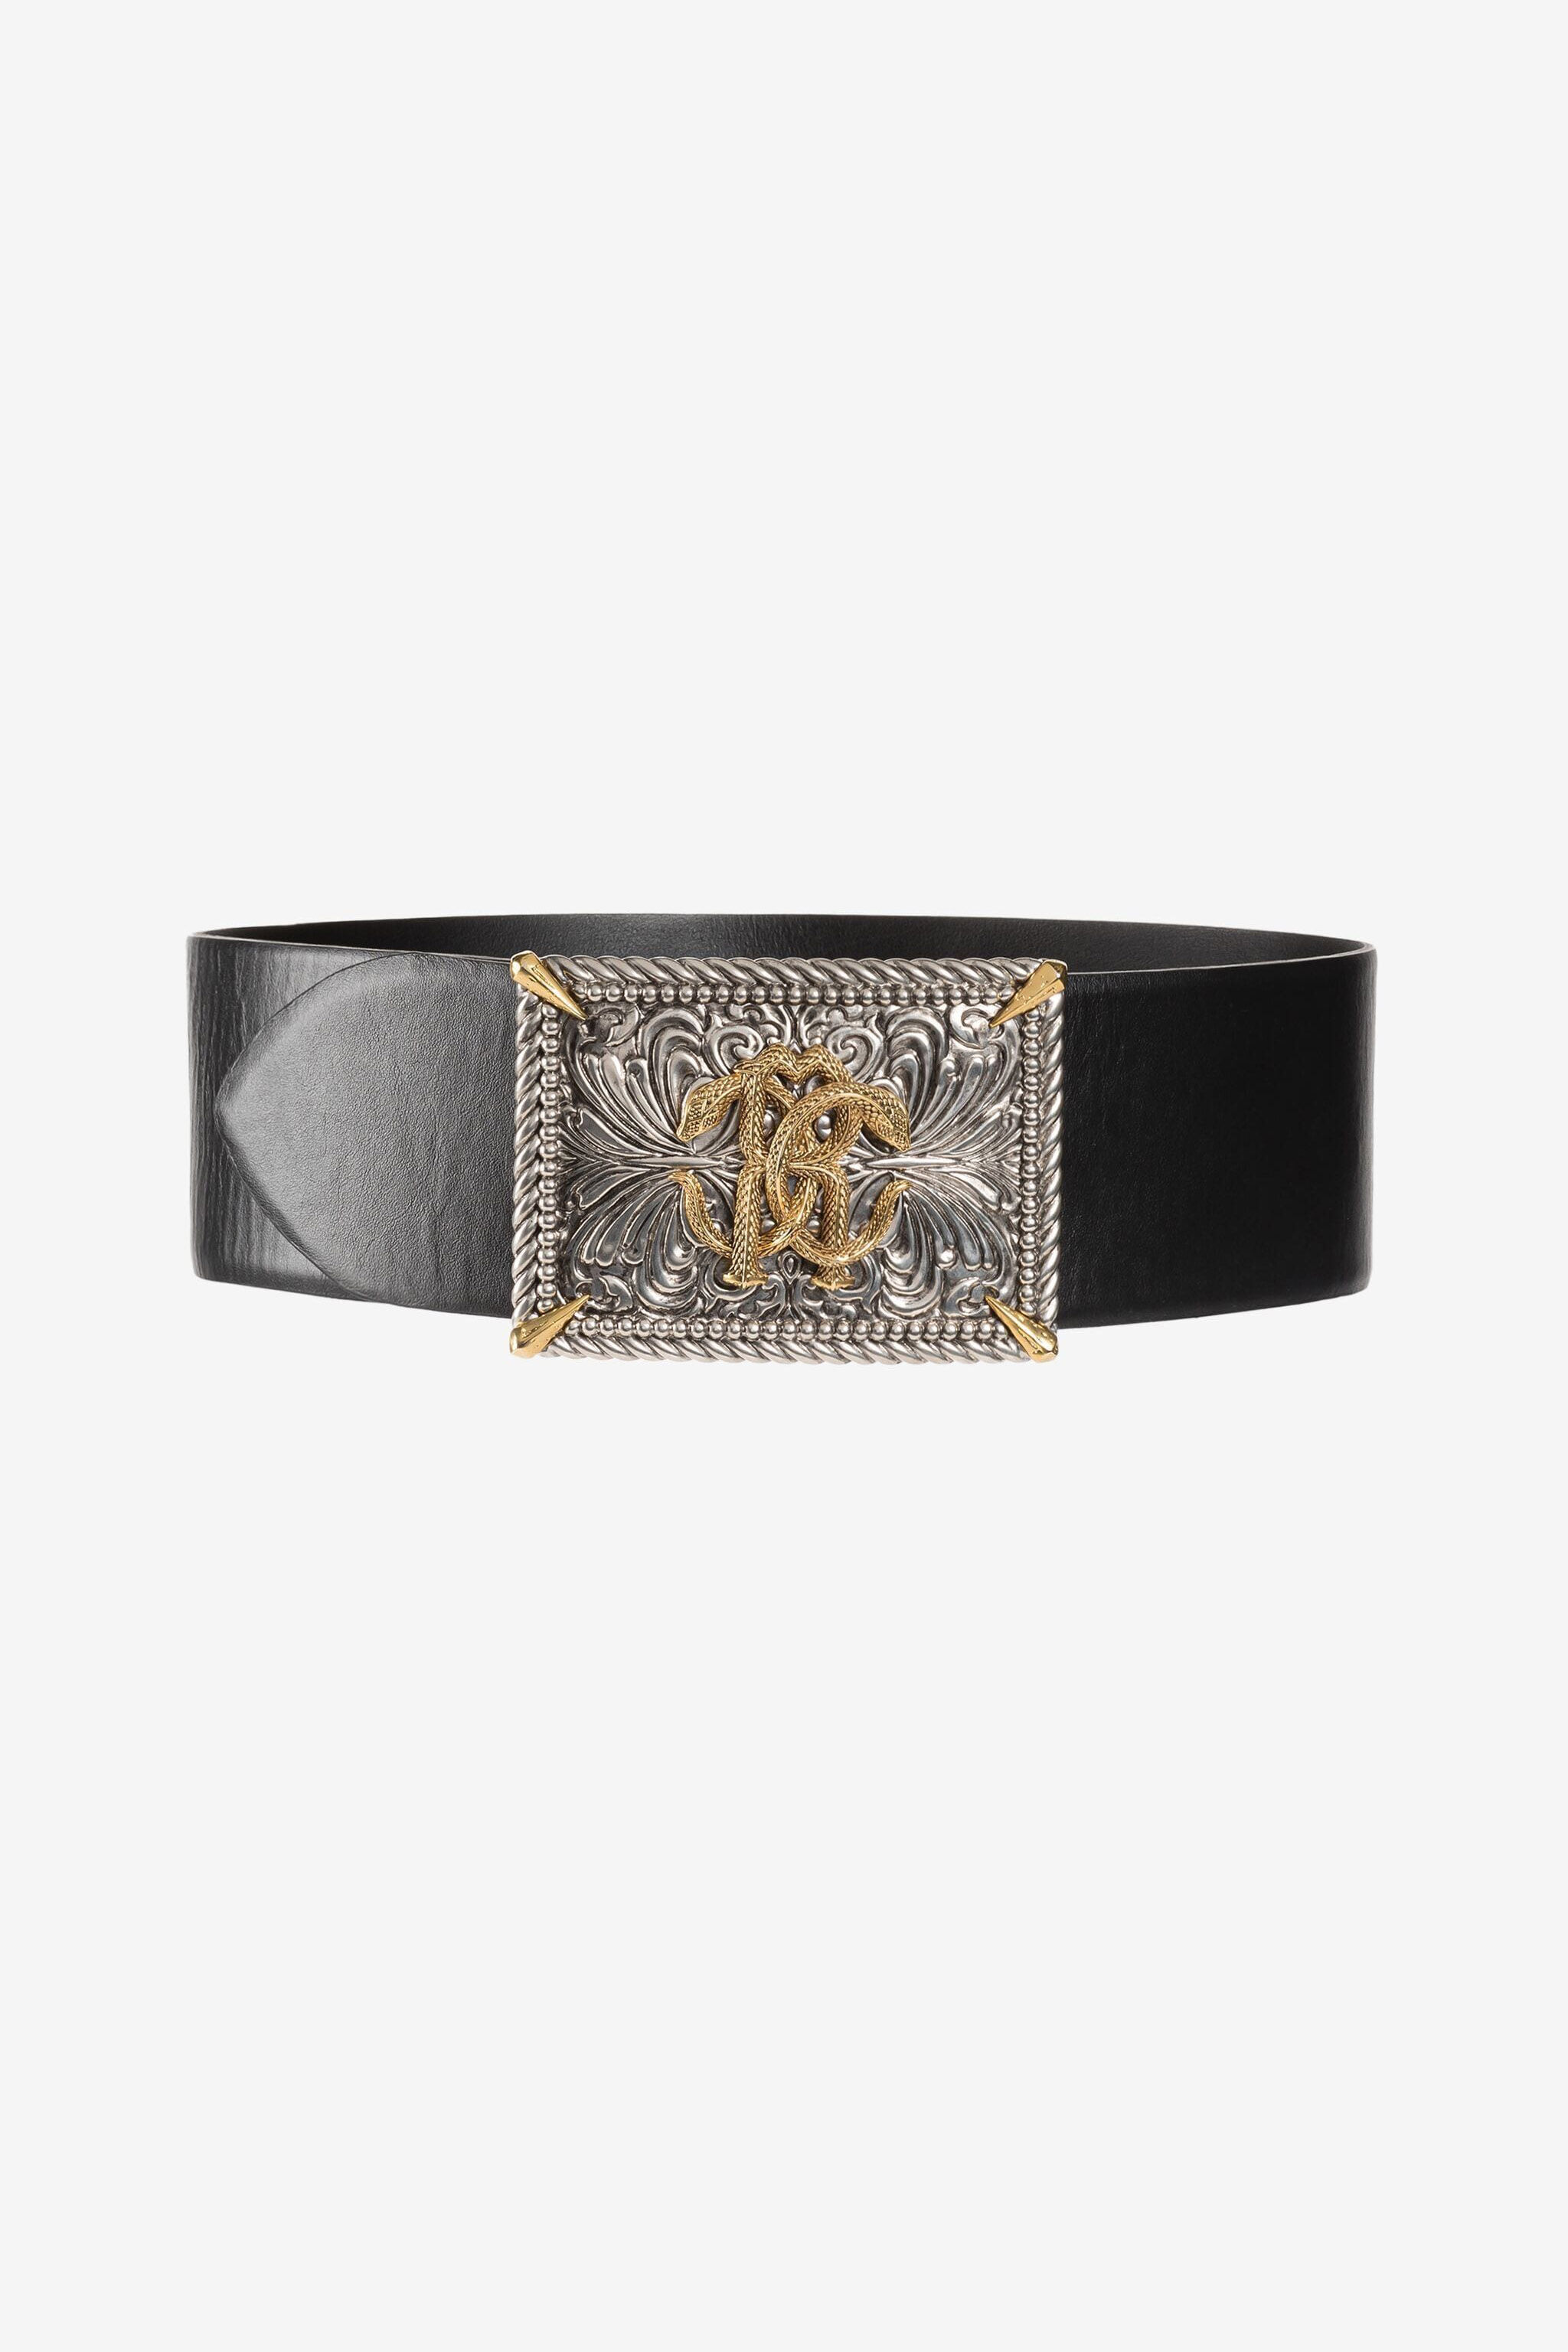 Roberto Cavalli Mirror Snake leather belt - Black